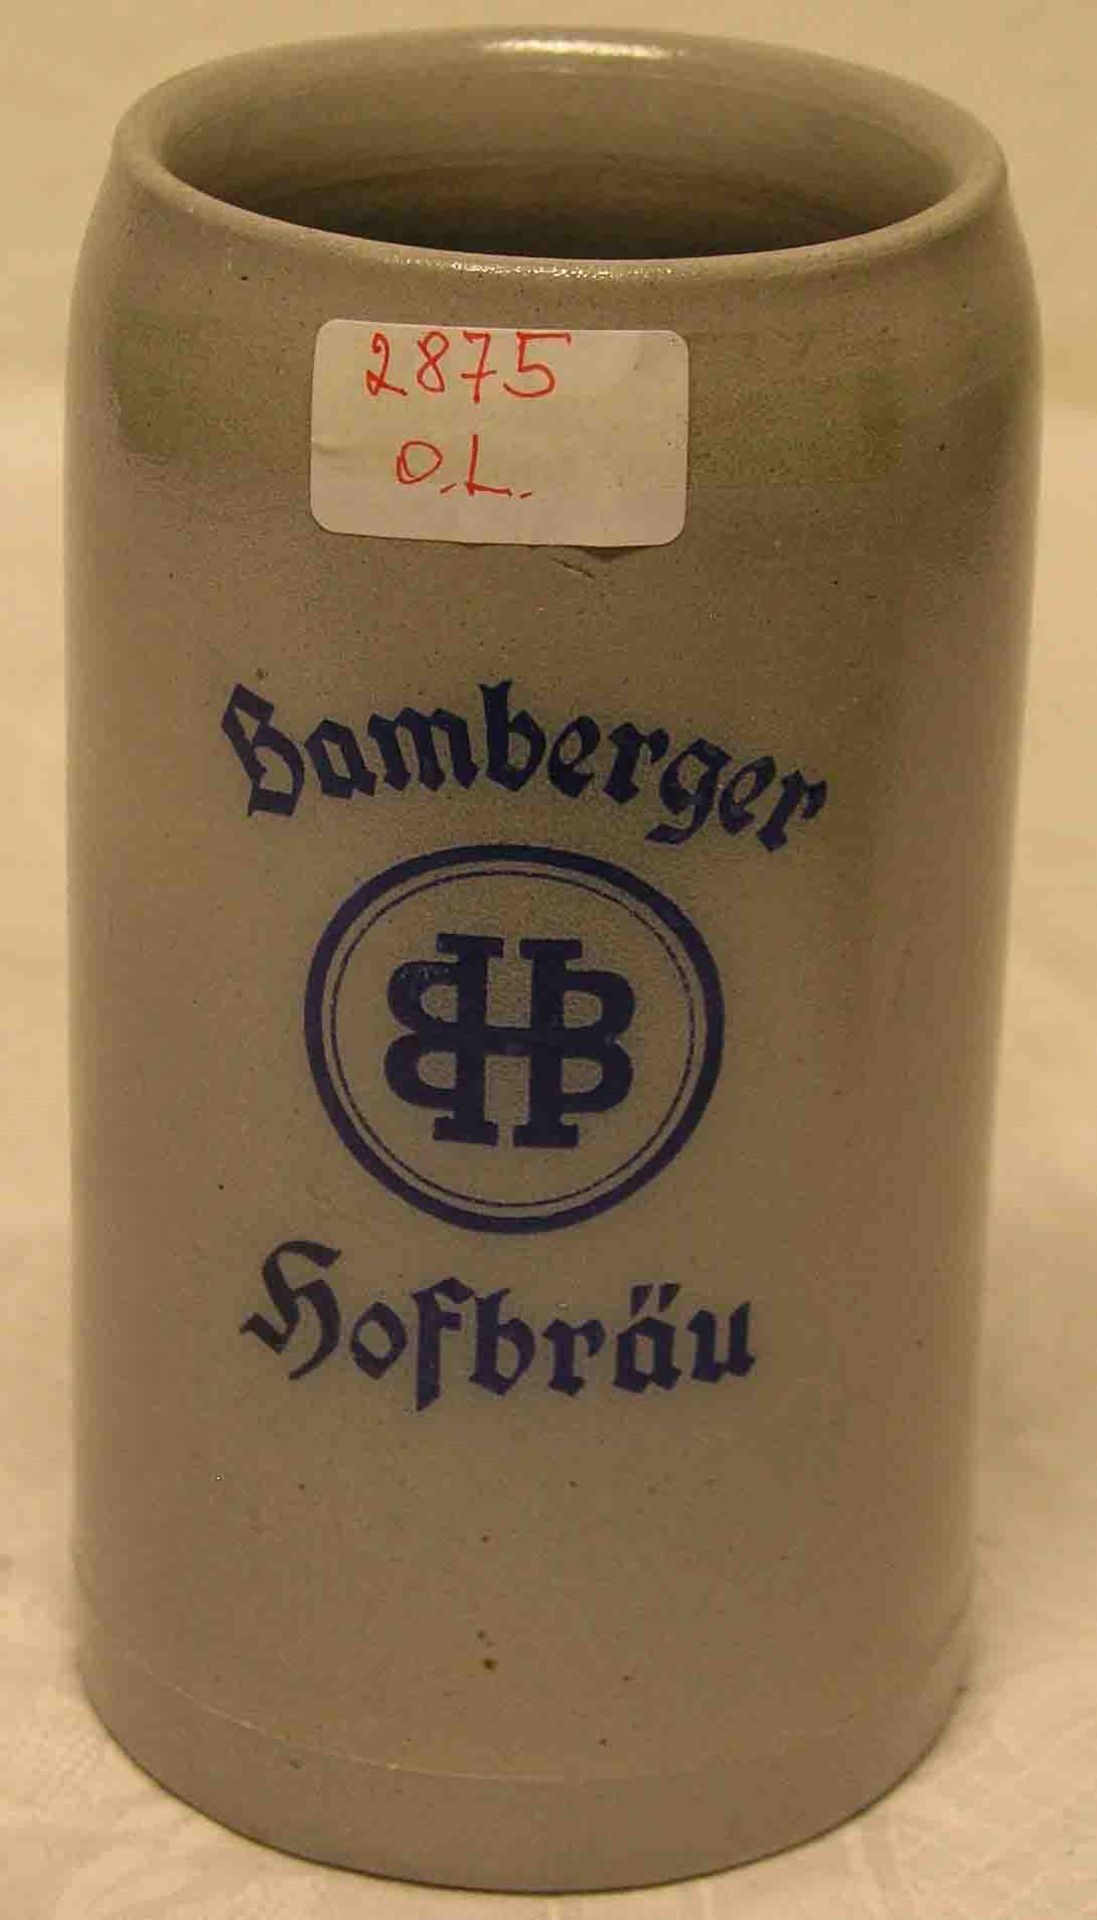 Brauerei Maßkrug "Bamberger Hofbräu". Steinzeug.- - -20.17 % buyer's premium on the hammer price19.